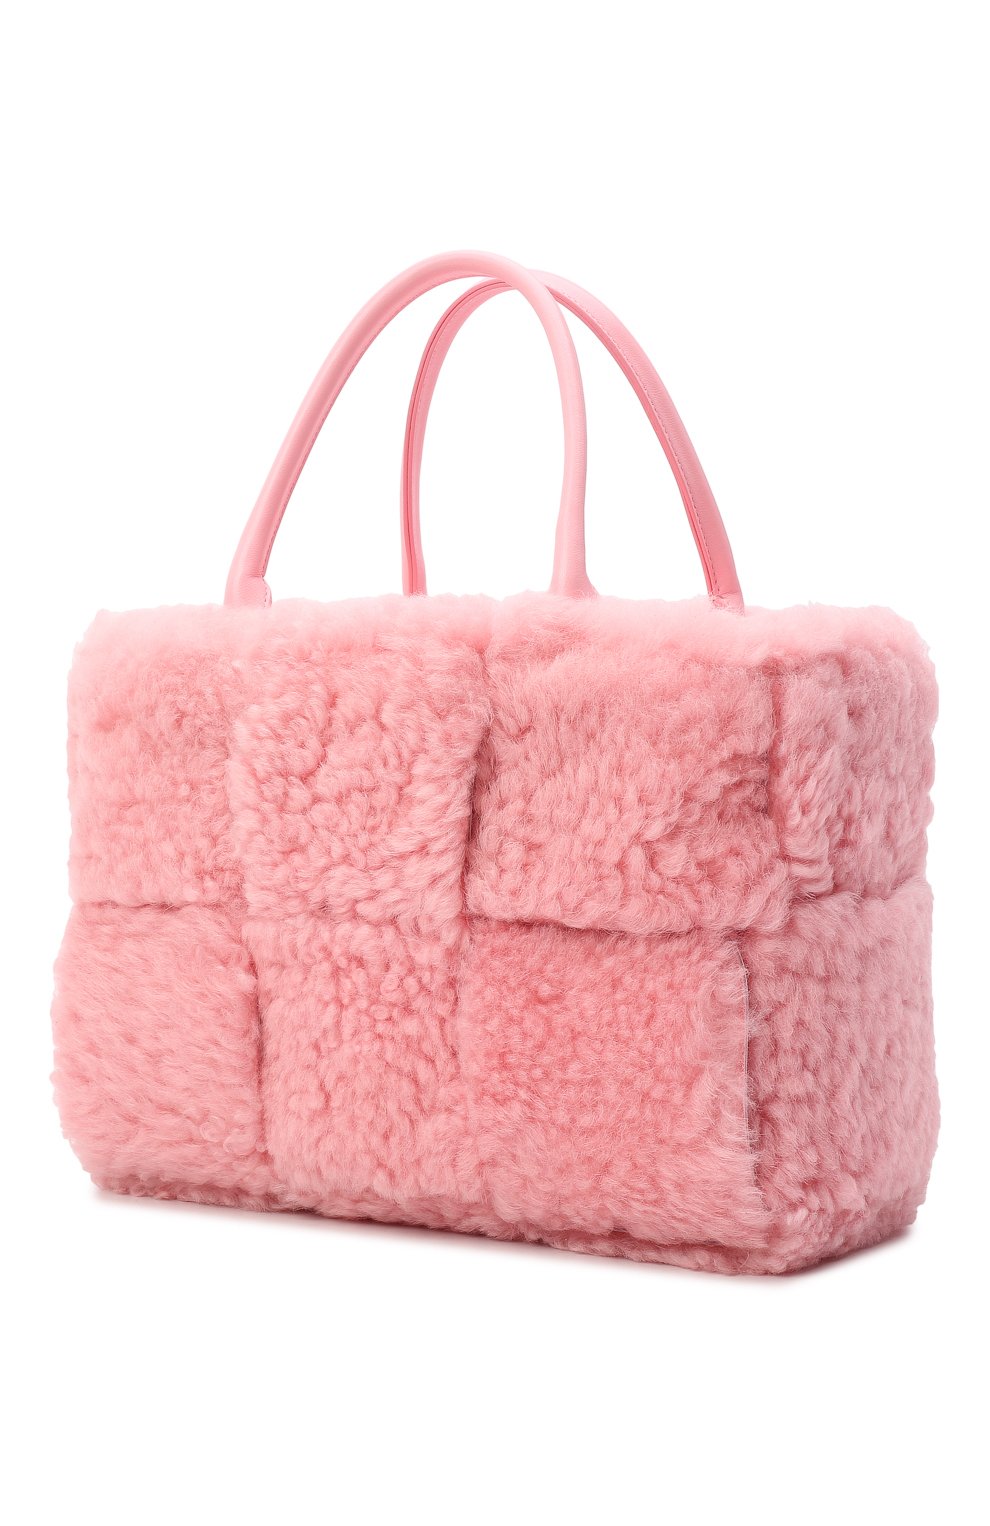 Женский сумка-тоут arco small BOTTEGA VENETA розового цвета, арт. 652867/V13F1 | Фото 4 (Материал: Натуральный мех; Сумки-технические: Сумки-шопперы; Размер: small)